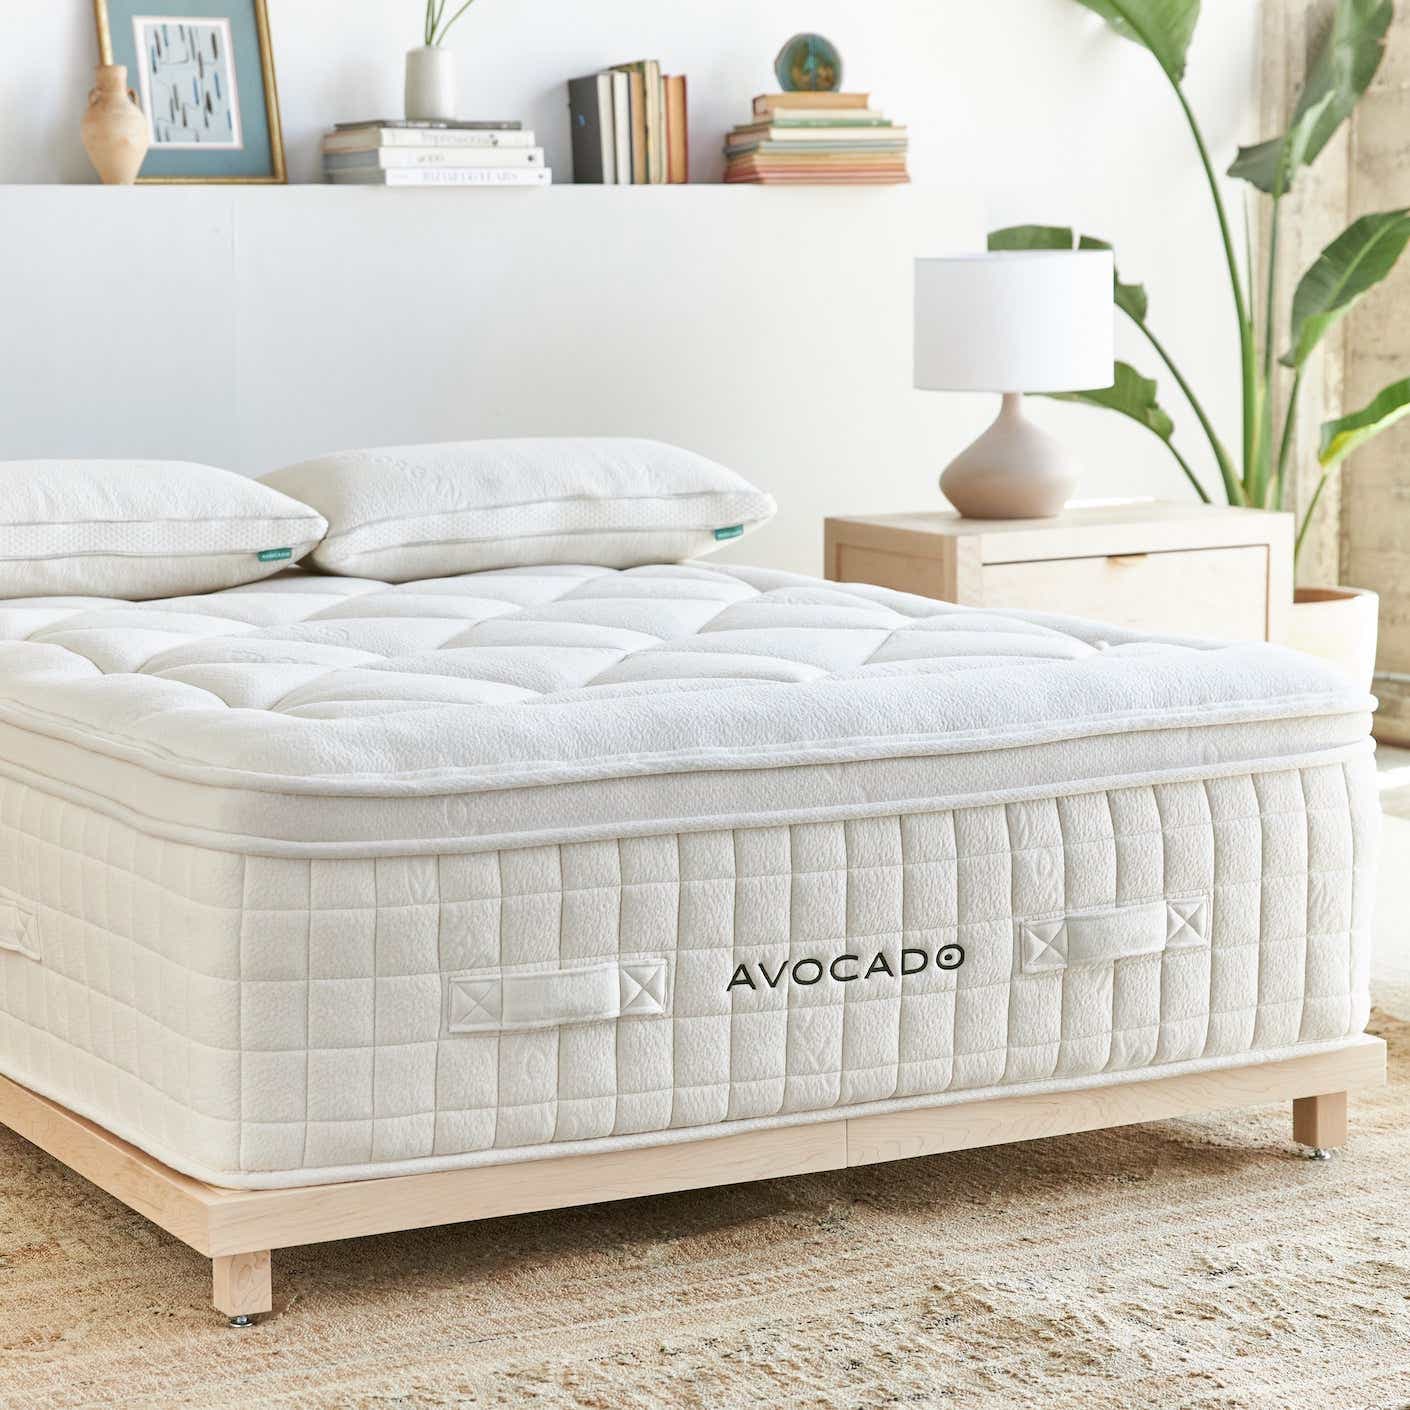 An Avocado mattress on a white bed.